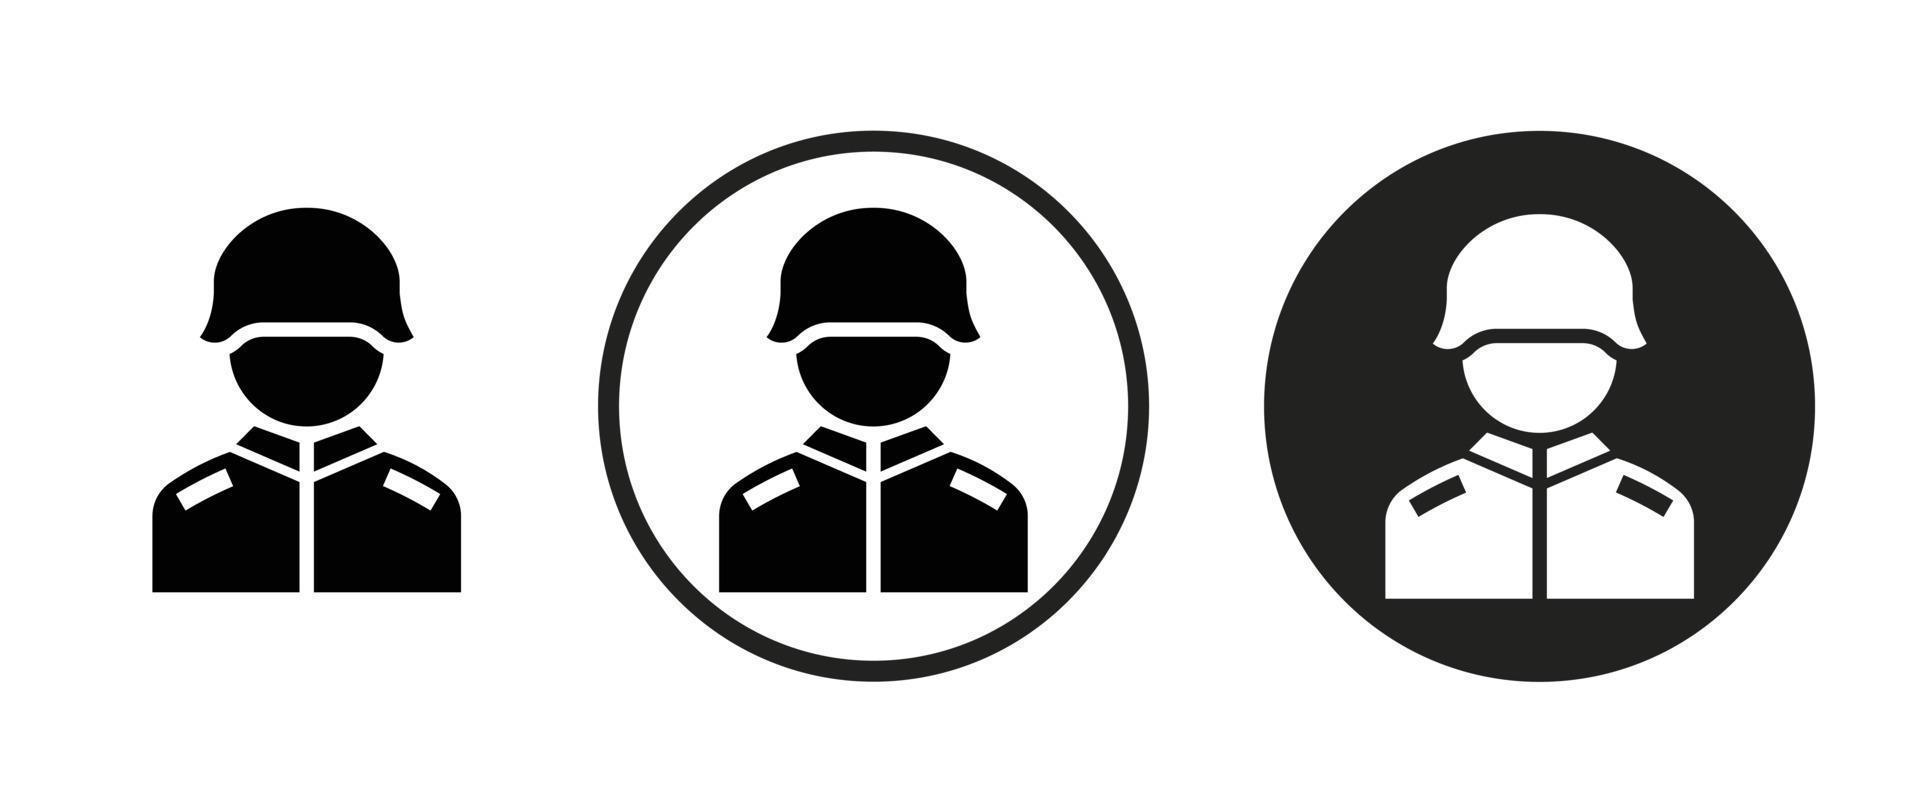 Soldier icon . web icon set .vector illustration vector